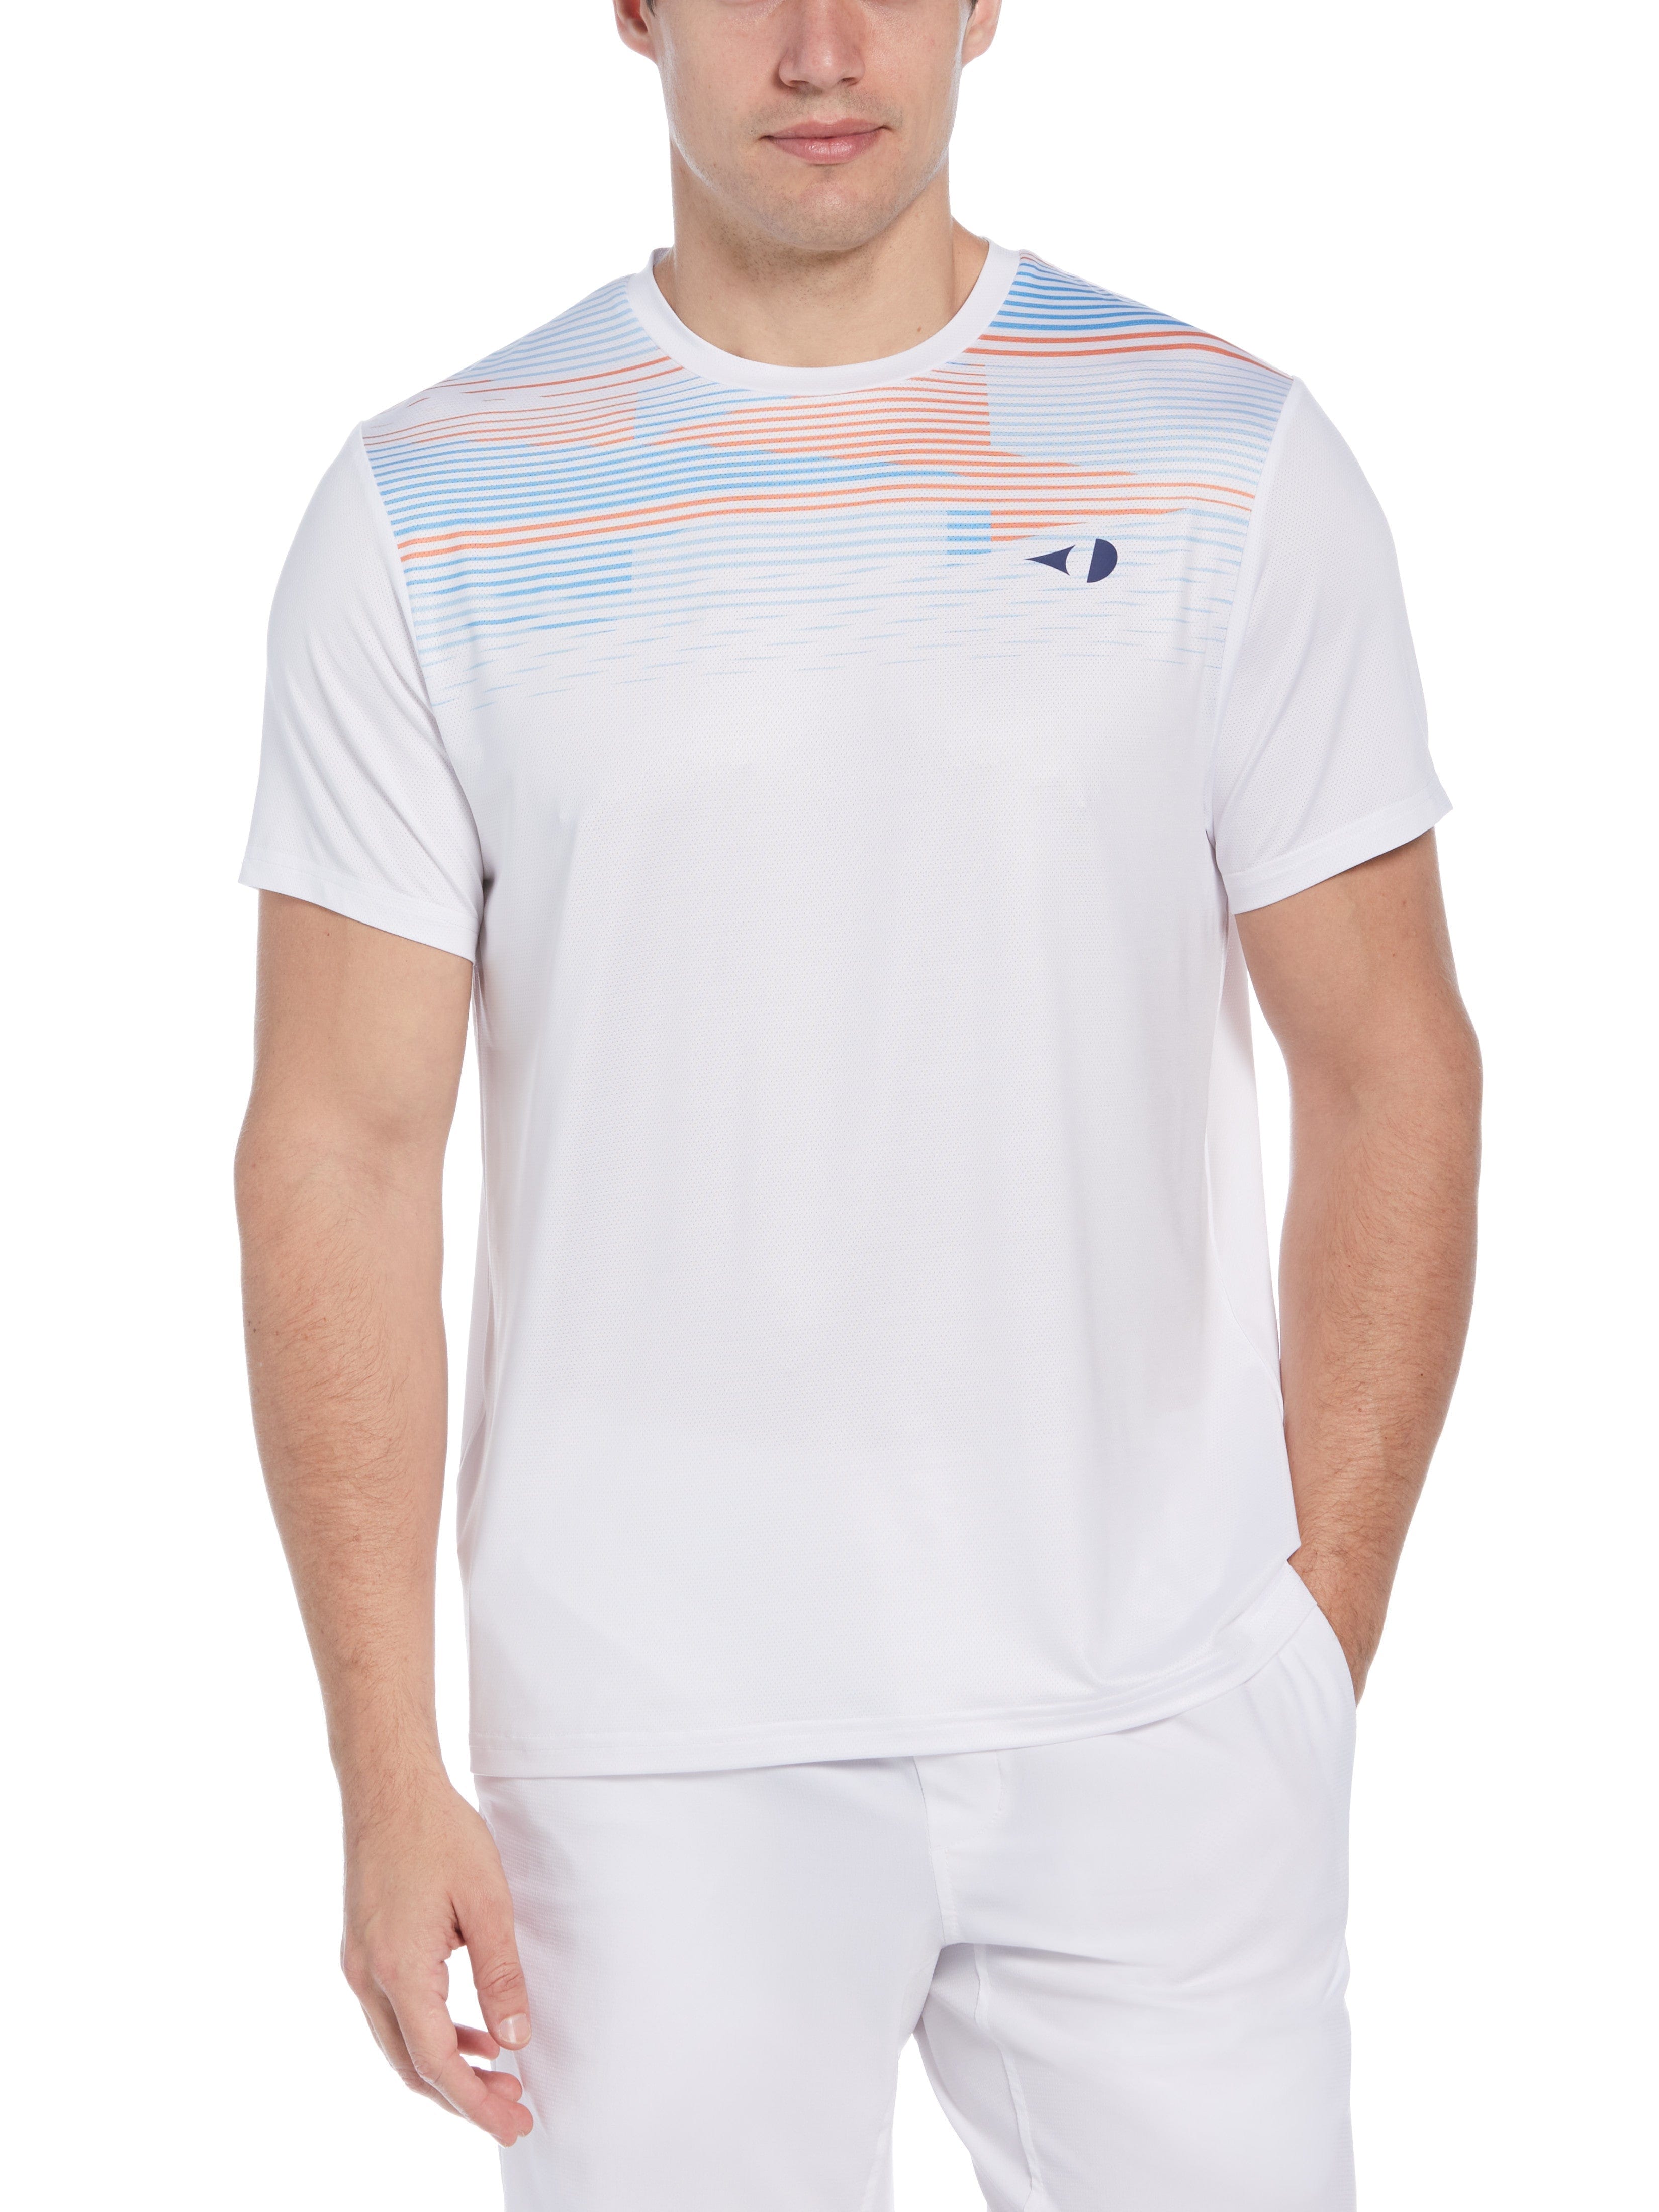 Grand Slam Mens Linear Chest Printed Tennis T-Shirt, Size XL, White, Polyester/Spandex | Golf Apparel Shop